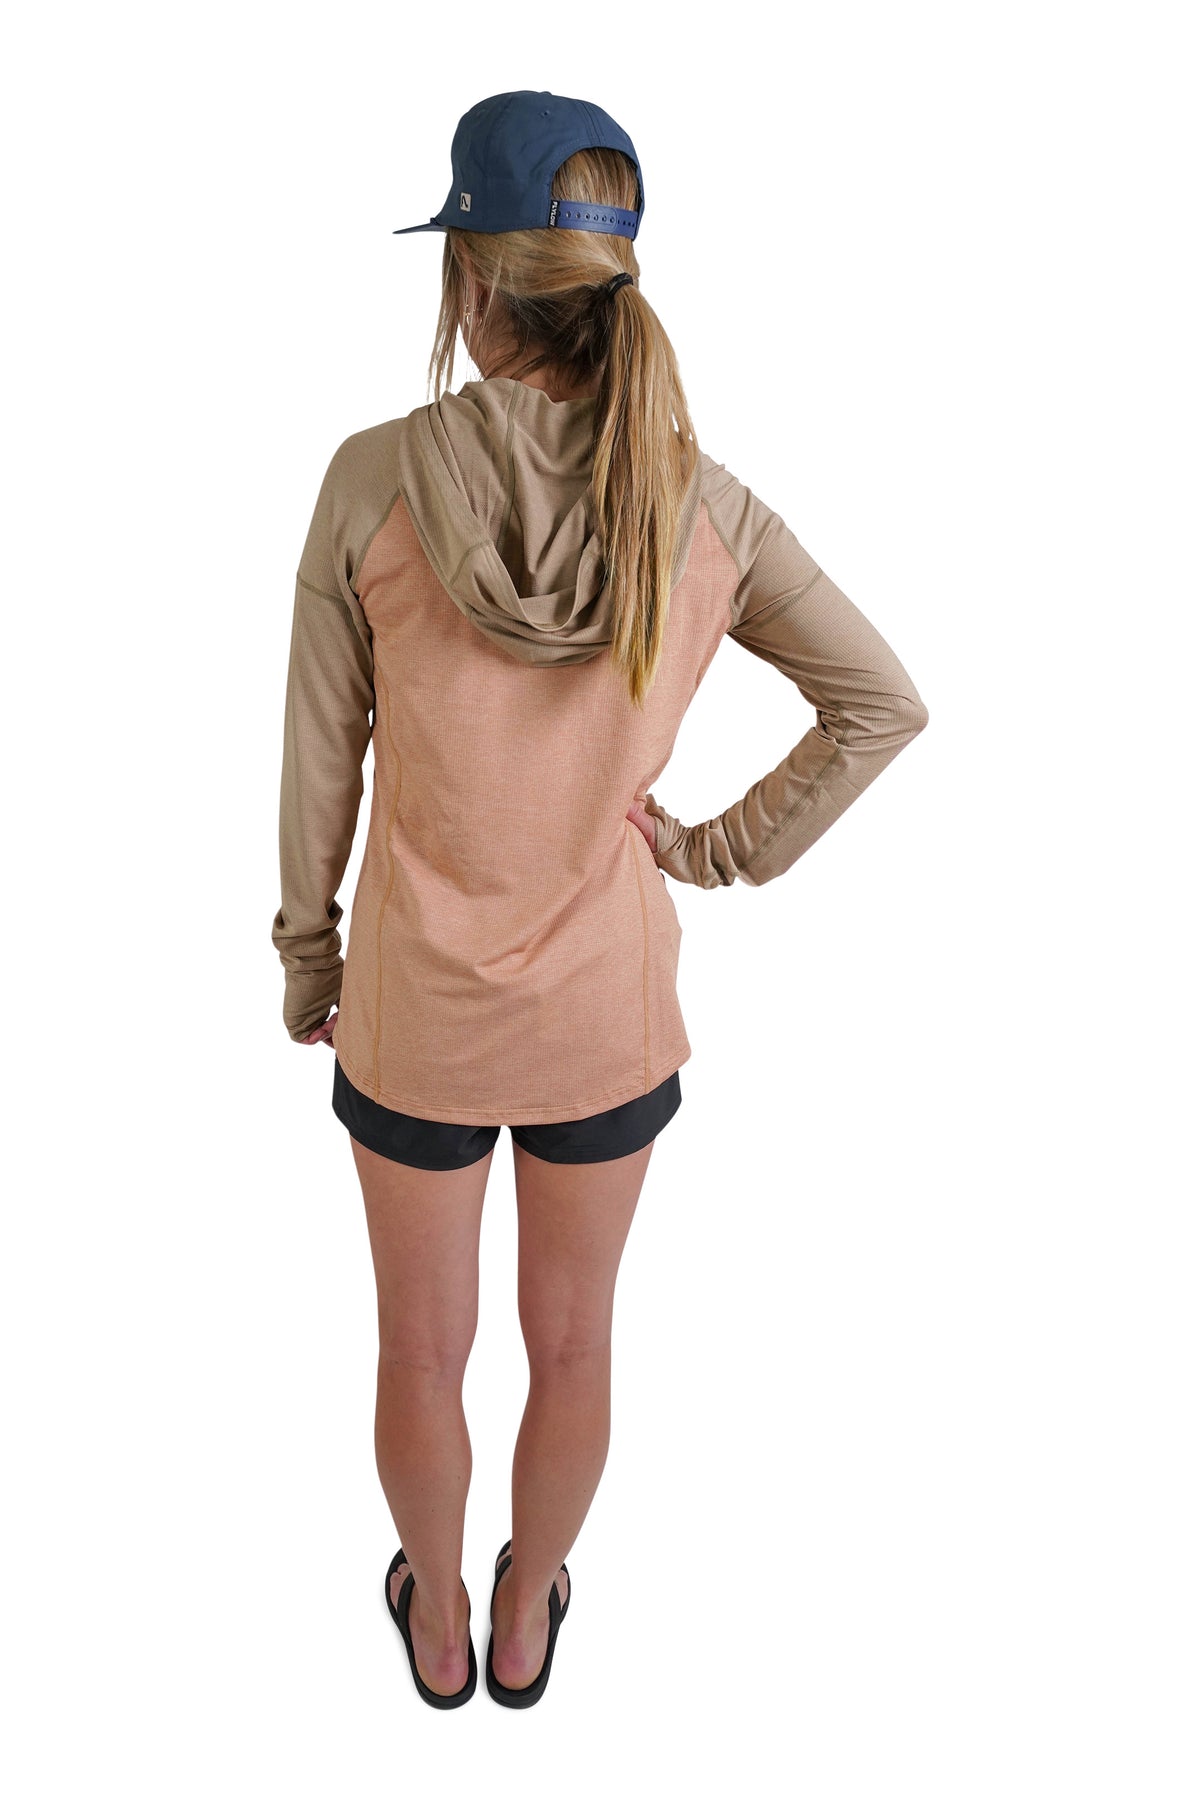 Zelos Shirt Women's XL Long Sleeve Faded Camo Look Top Polyester Blend